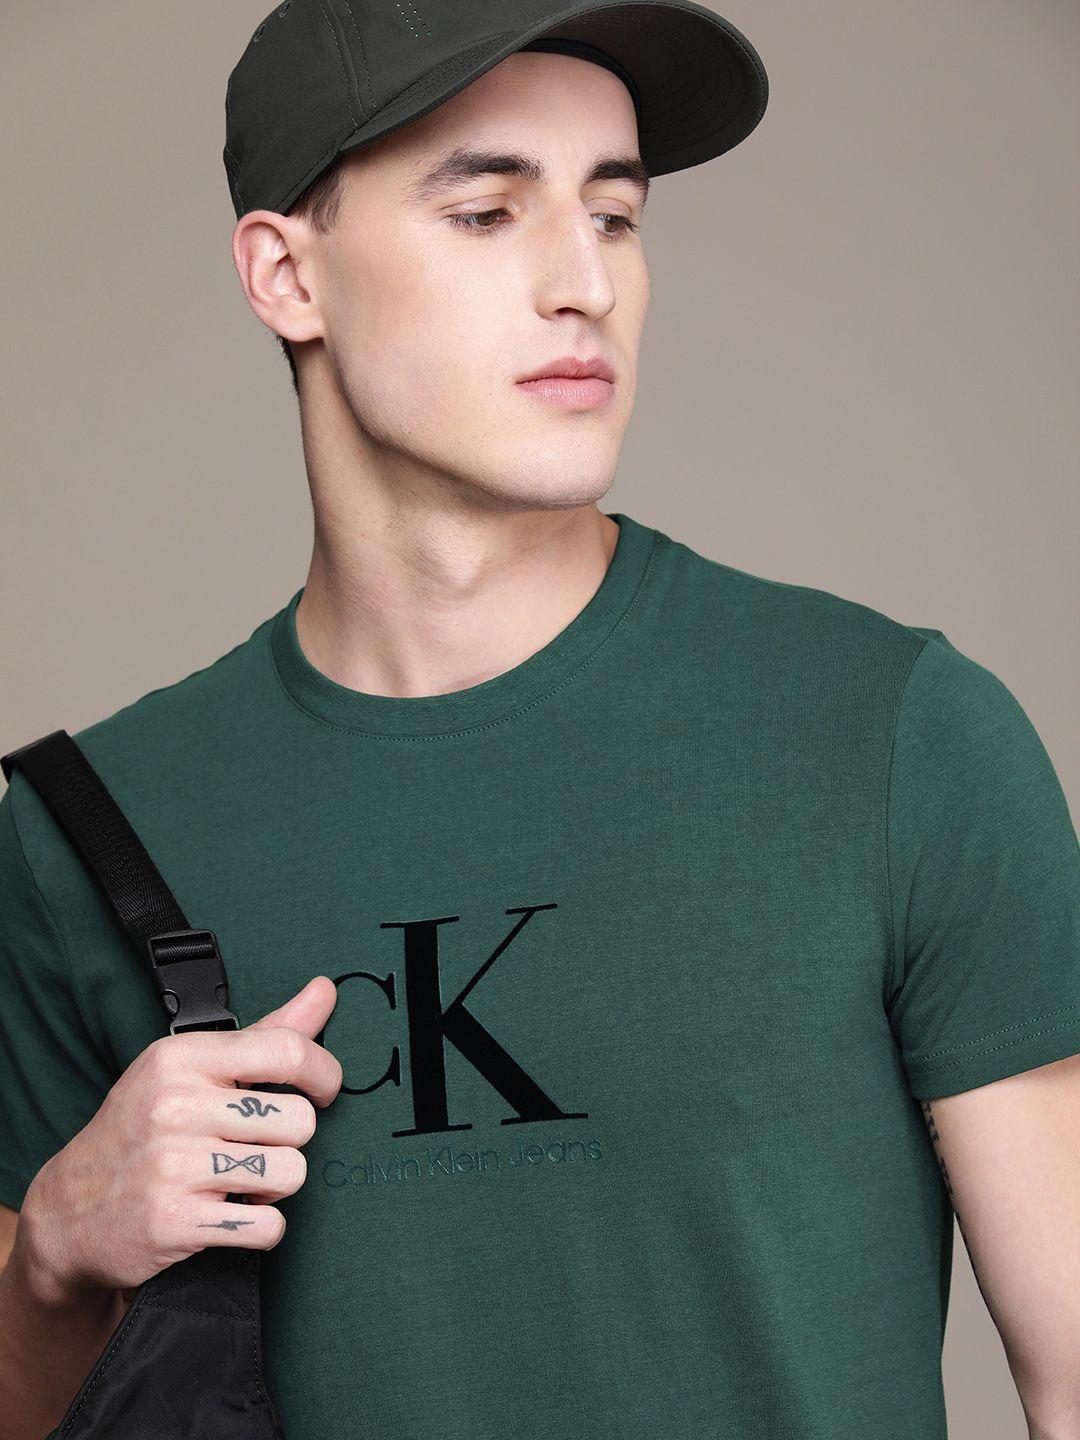 calvin klein jeans men teal green brand logo printed applique t-shirt